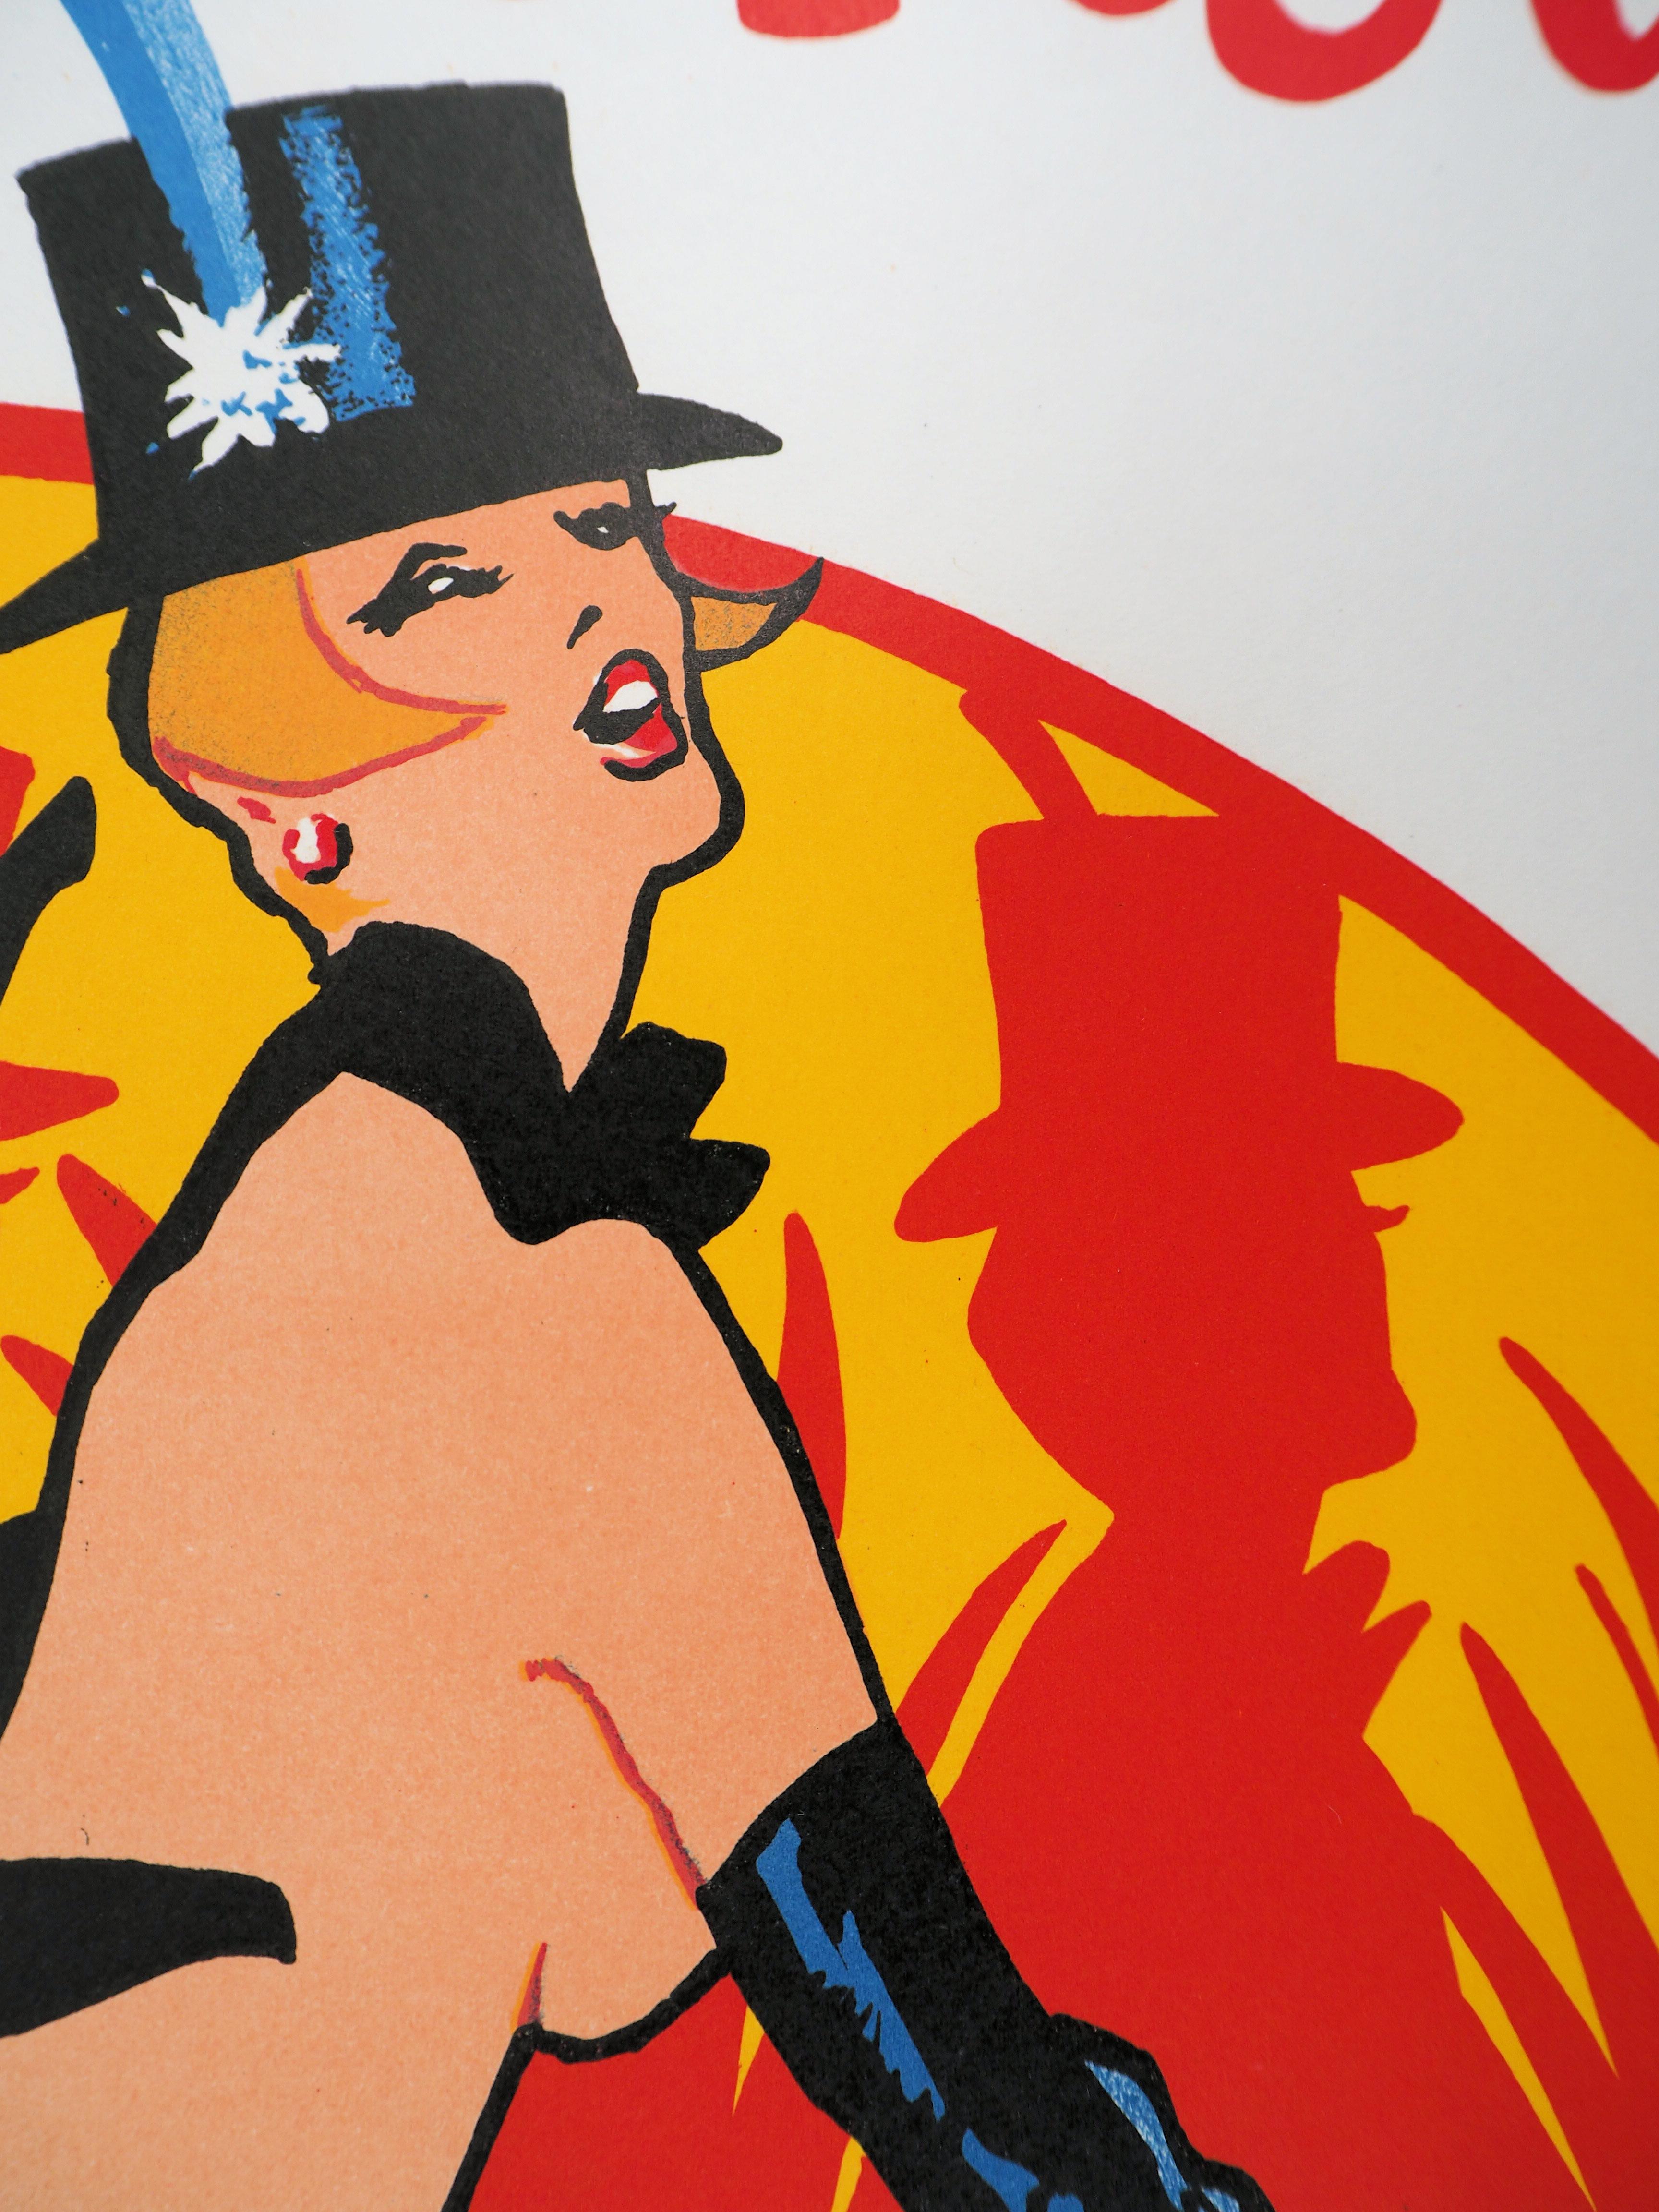 René GRUAU
Moulin Rouge : Femmes, femmes, femmes

Original lithograph
Printed signature in the plate
On paper 60 x 40 cm (c. 24 x 16 inch)

Information : Original exhibition poster for the review 'Femmes, femmes, femmes' at Moulin Rouge Cabaret